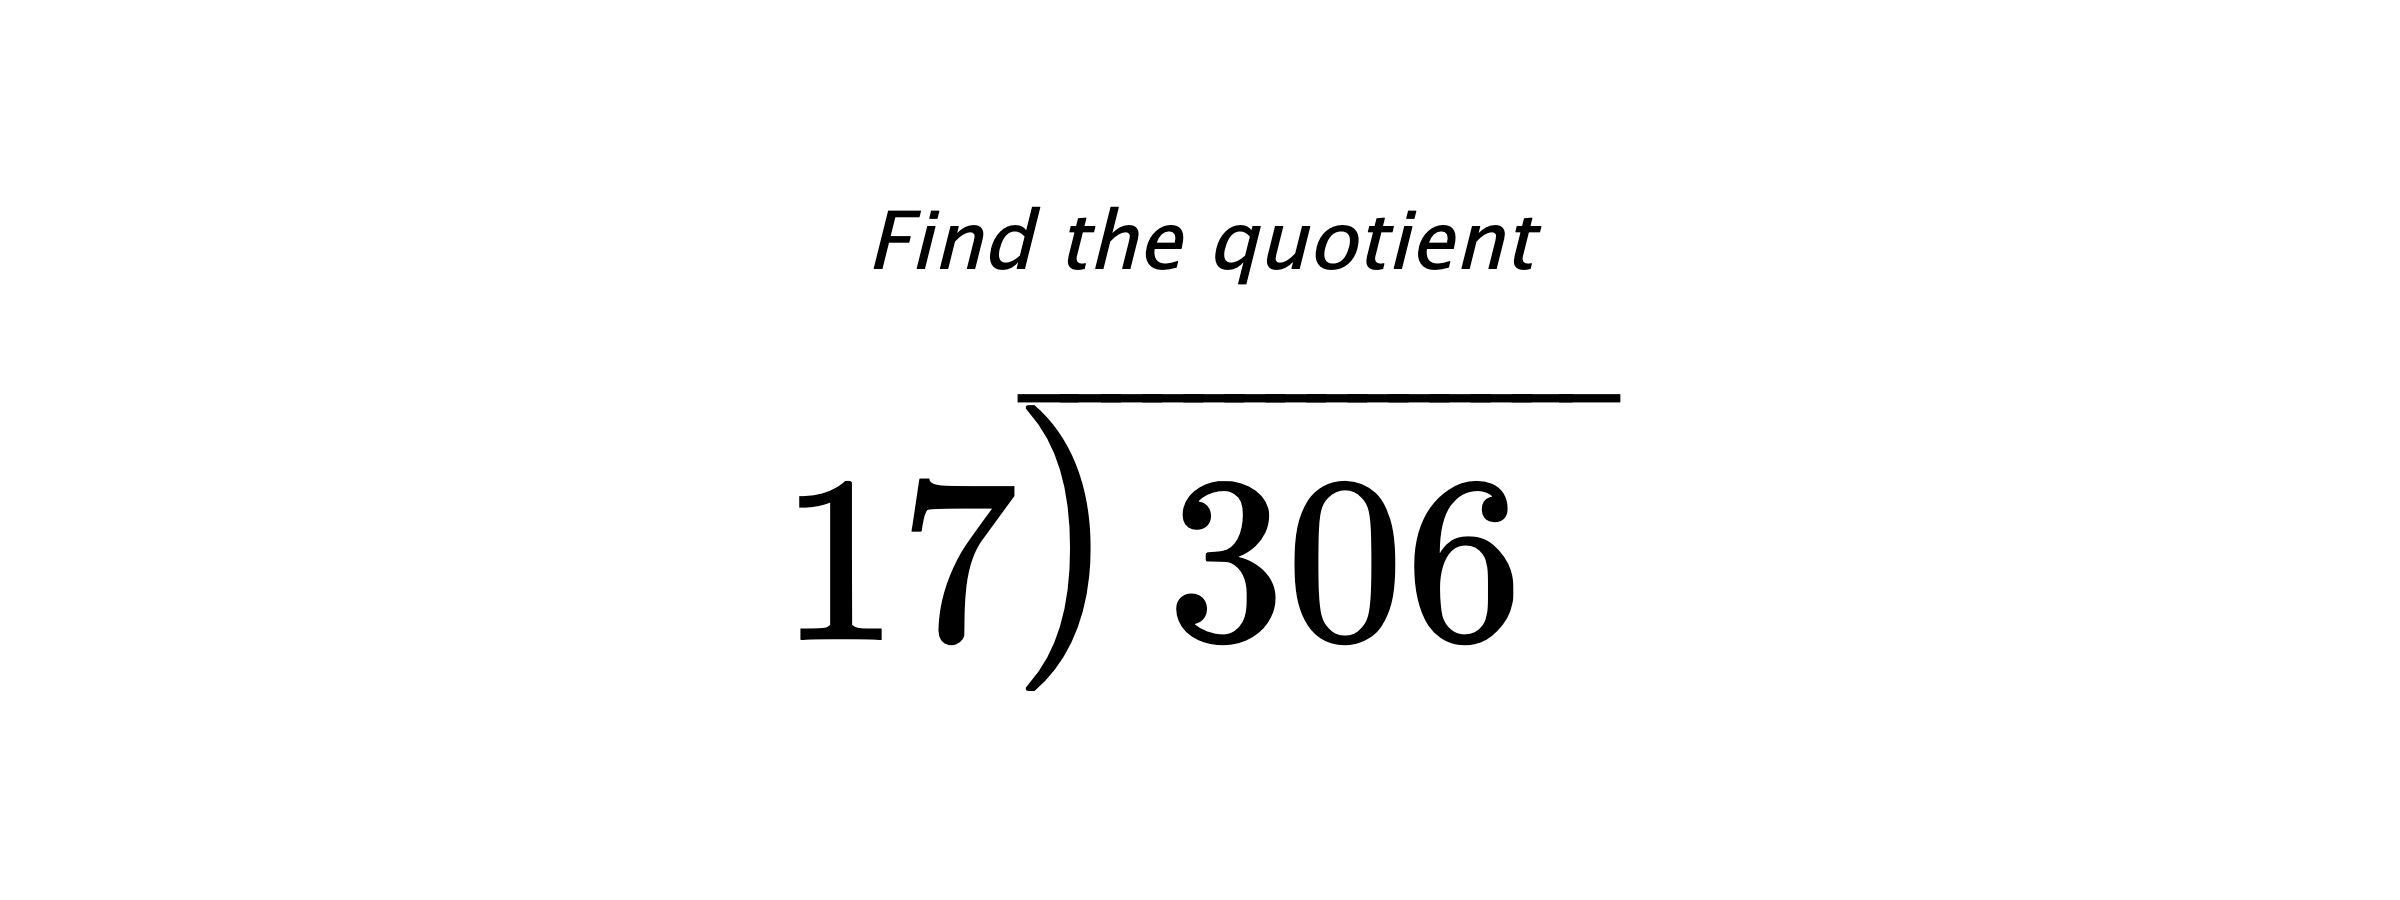 Find the quotient $ 17{\overline{\smash{\raise.3ex\hbox{$\big)$}}\,306\phantom{)}}} $